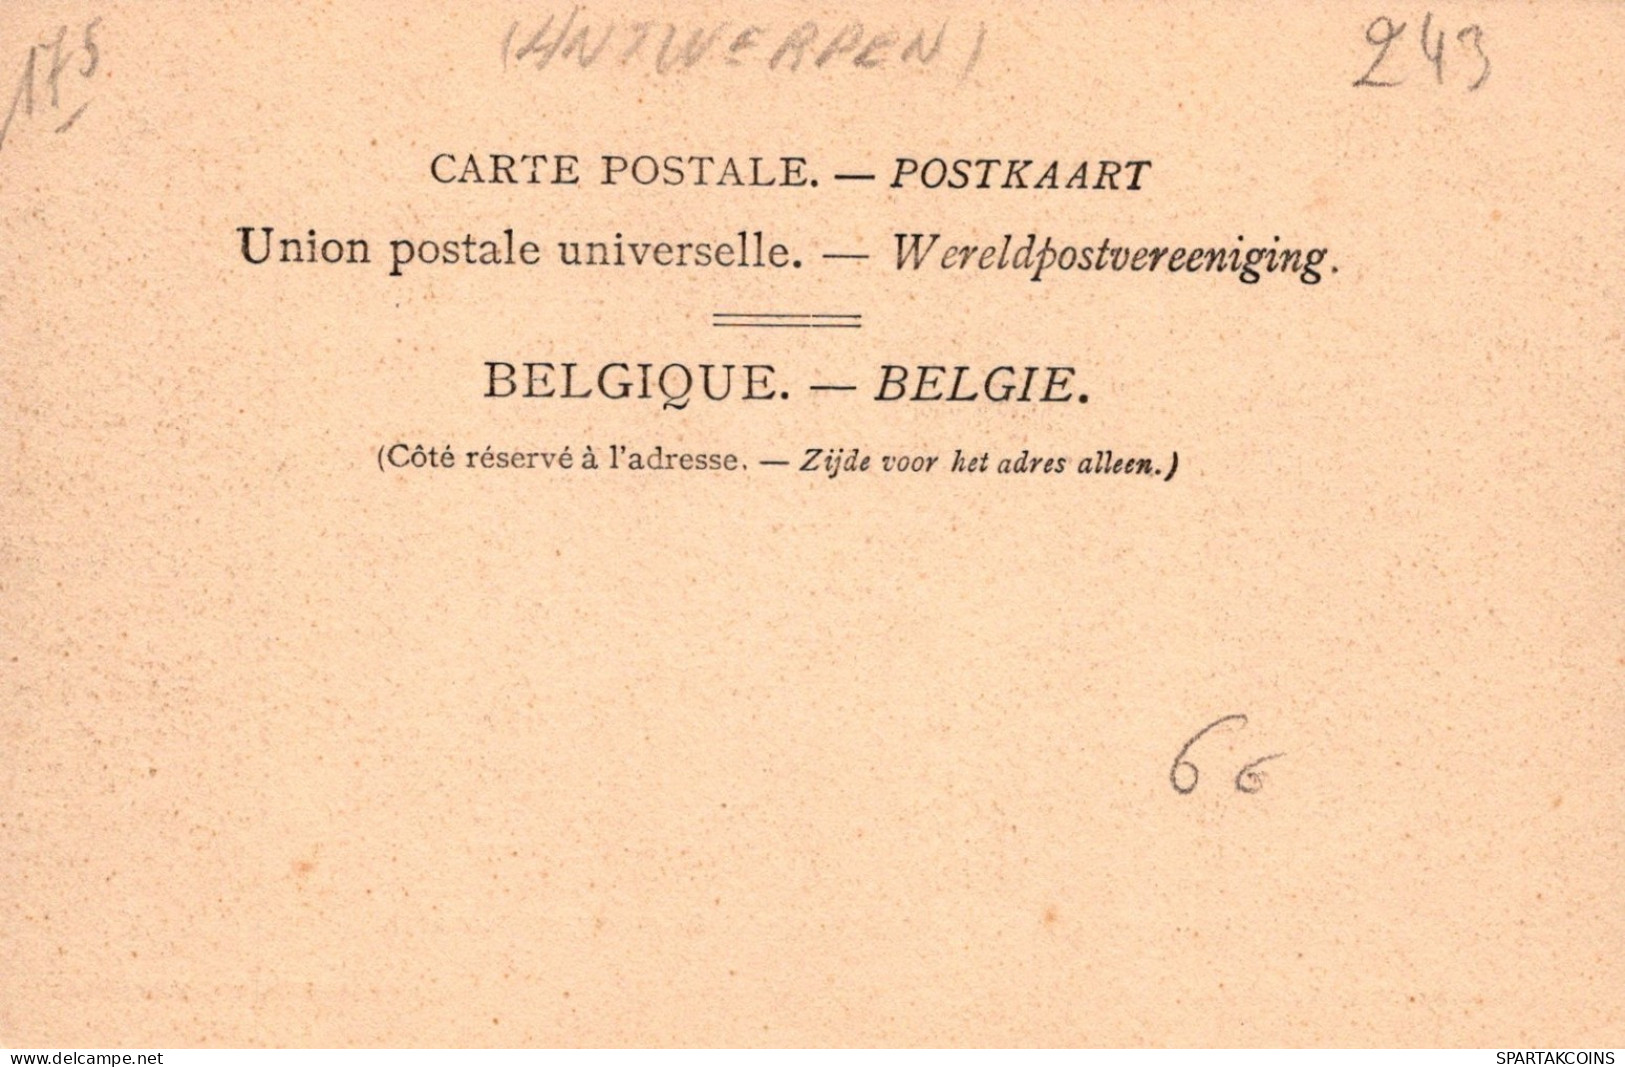 BELGIUM ANTWERPEN Postcard CPA Unposted #PAD295.GB